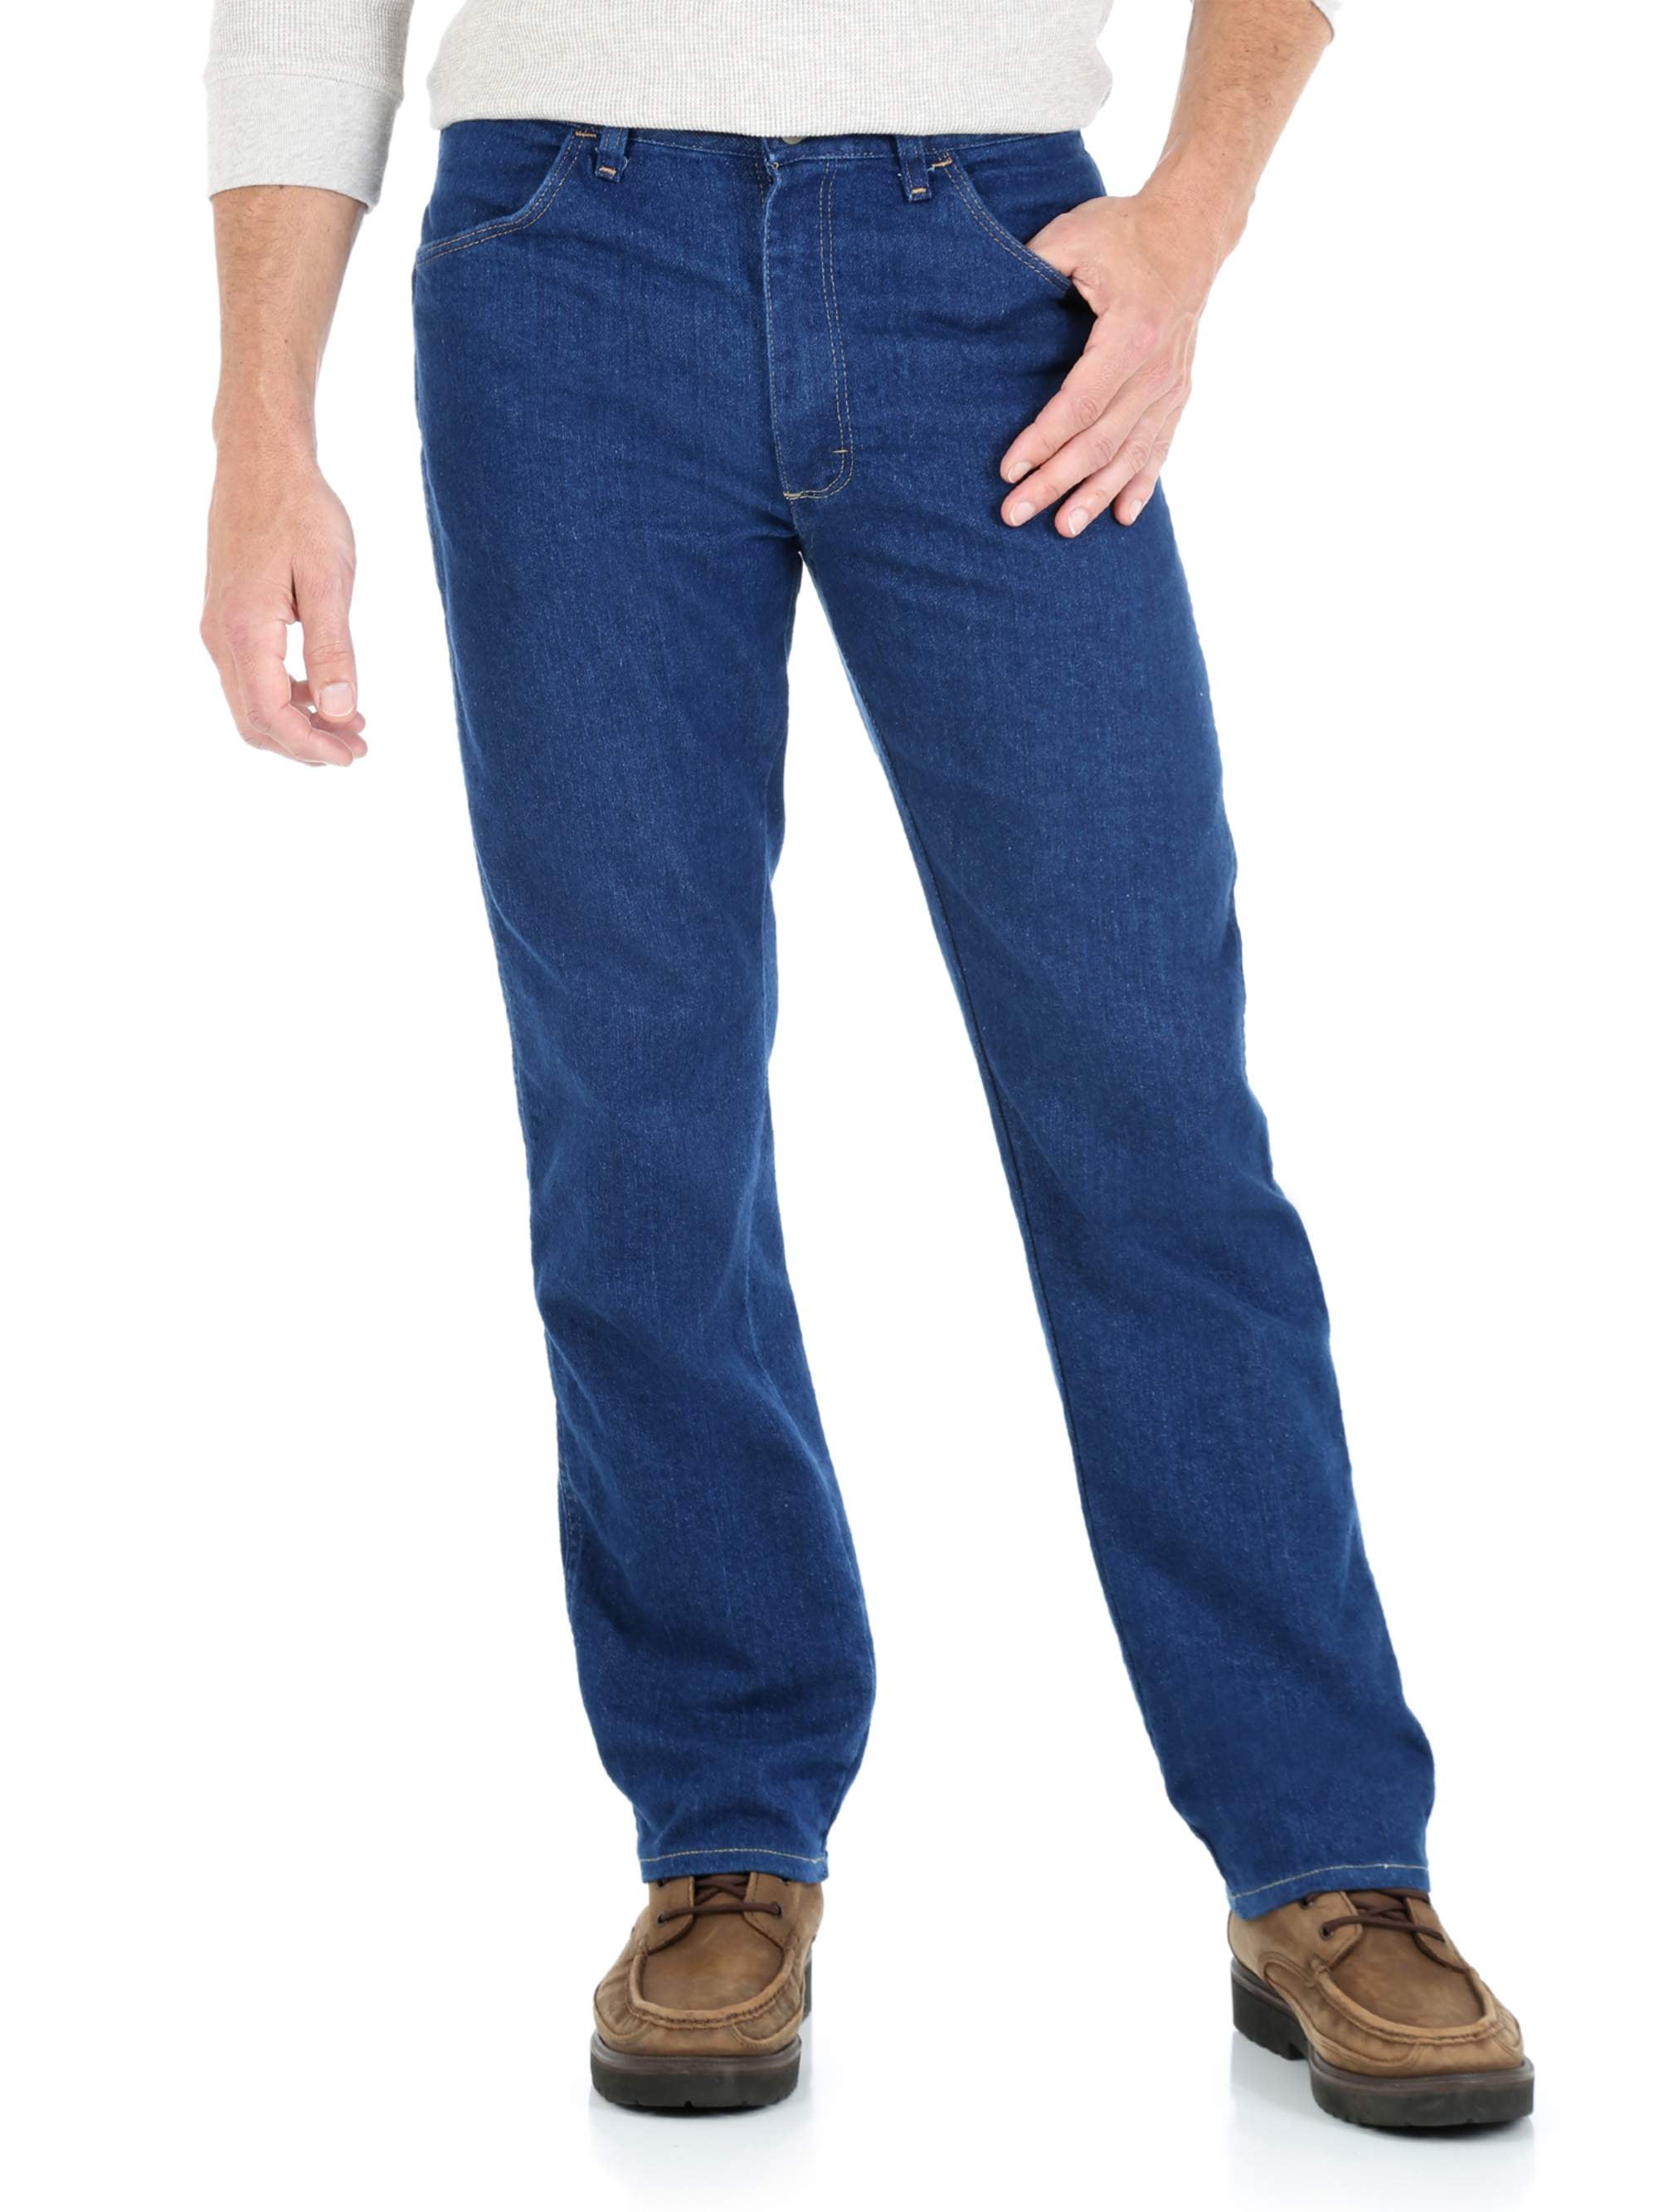 wrangler durable stretch denim jeans